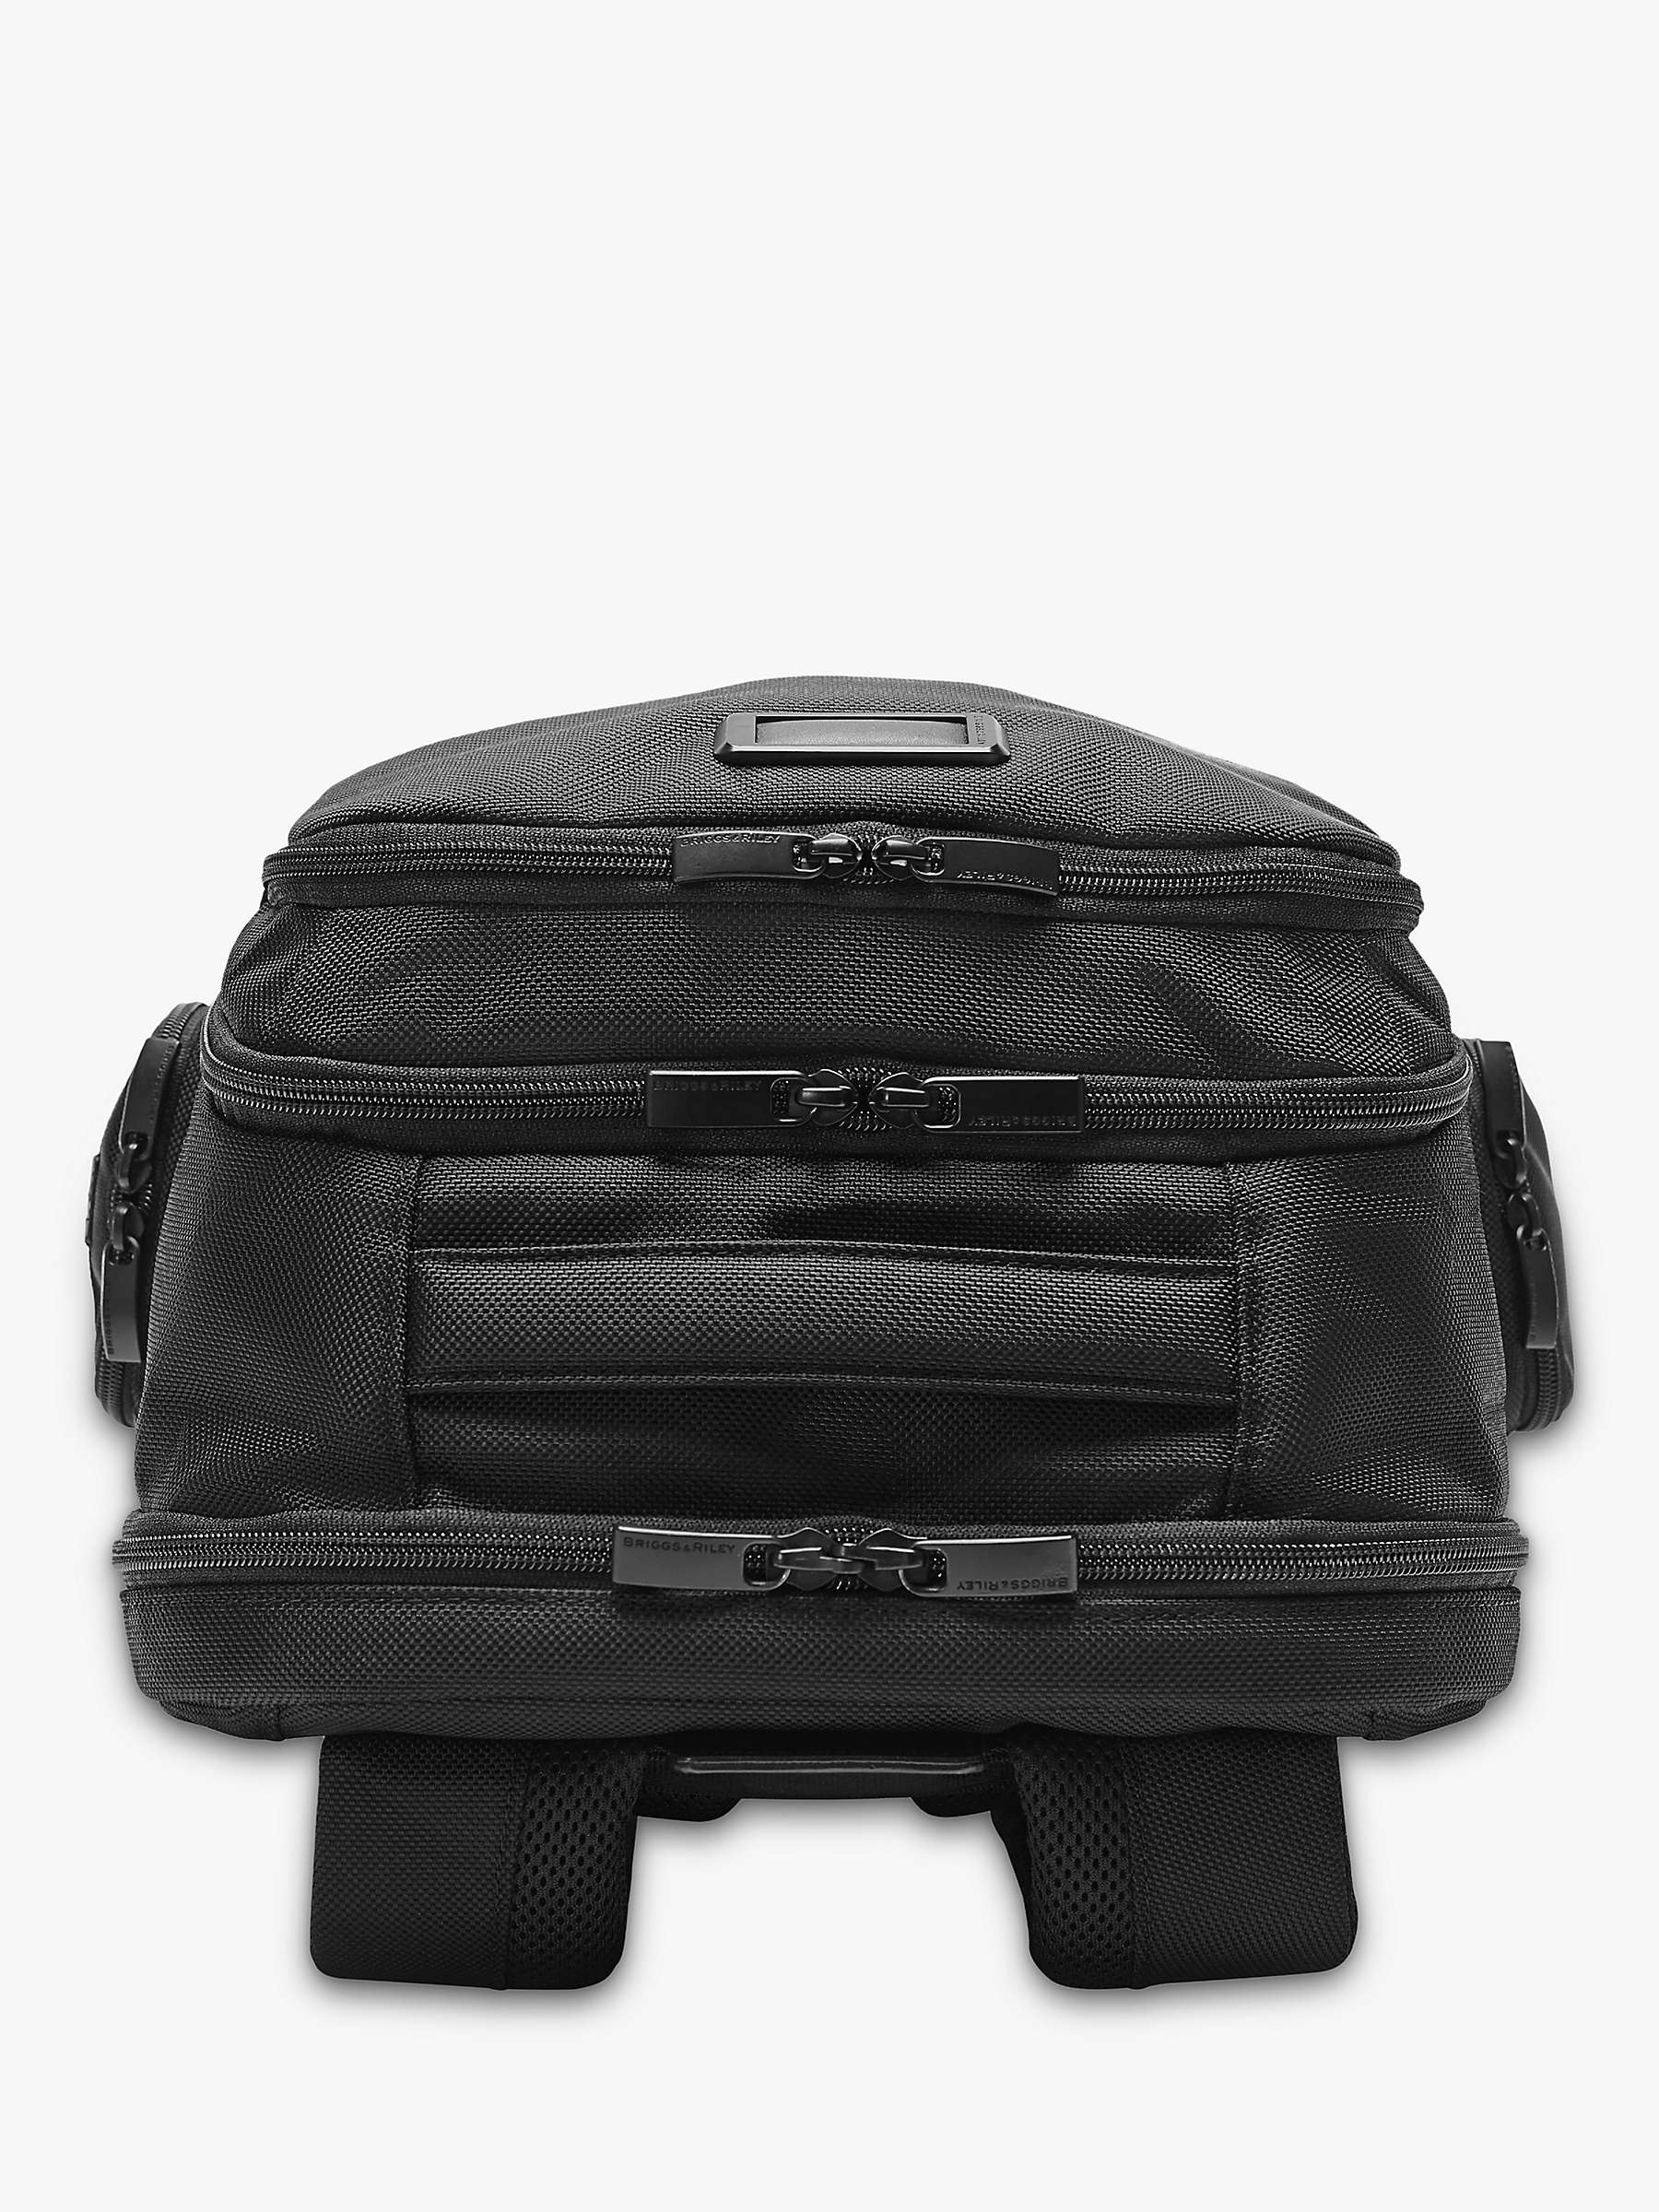 Buy Briggs & Riley Baseline Travel Backpack, Black Online at johnlewis.com